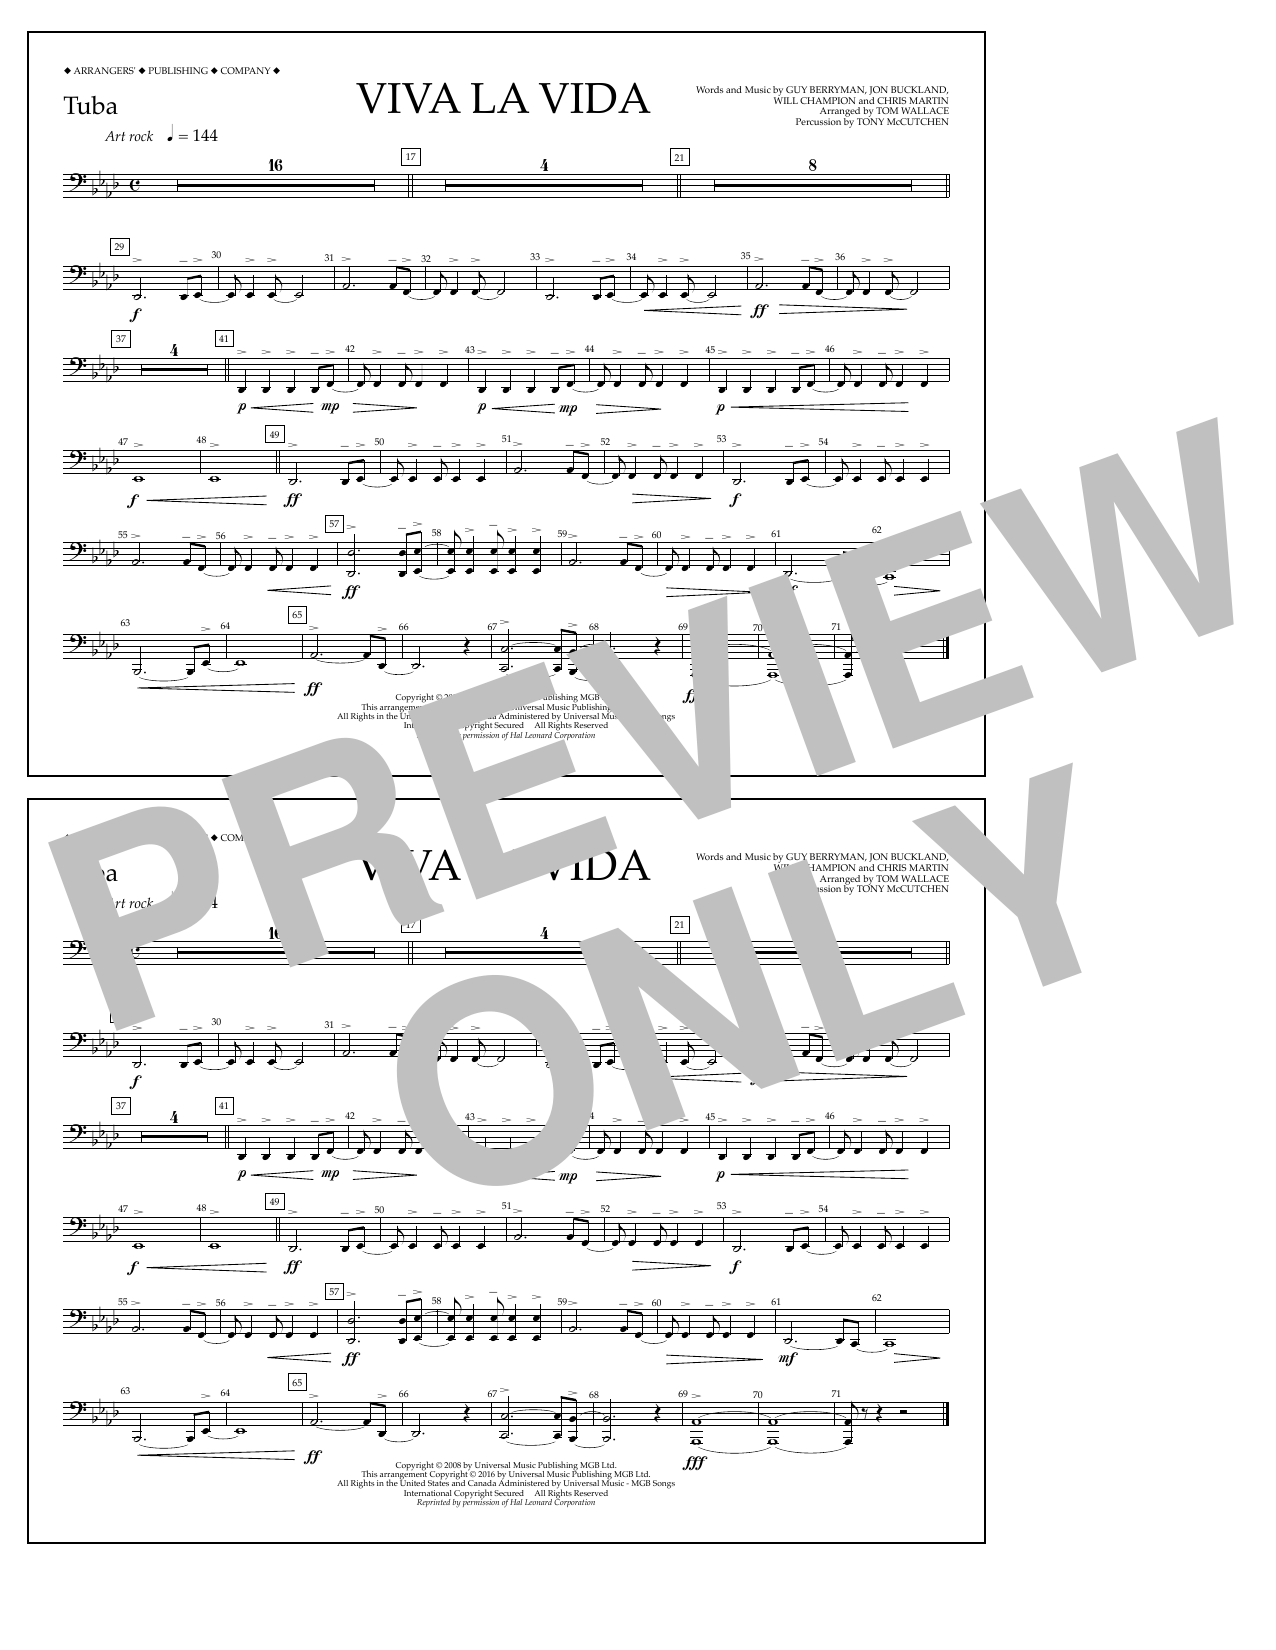 Tom Wallace Viva La Vida - Tuba Sheet Music Notes & Chords for Marching Band - Download or Print PDF